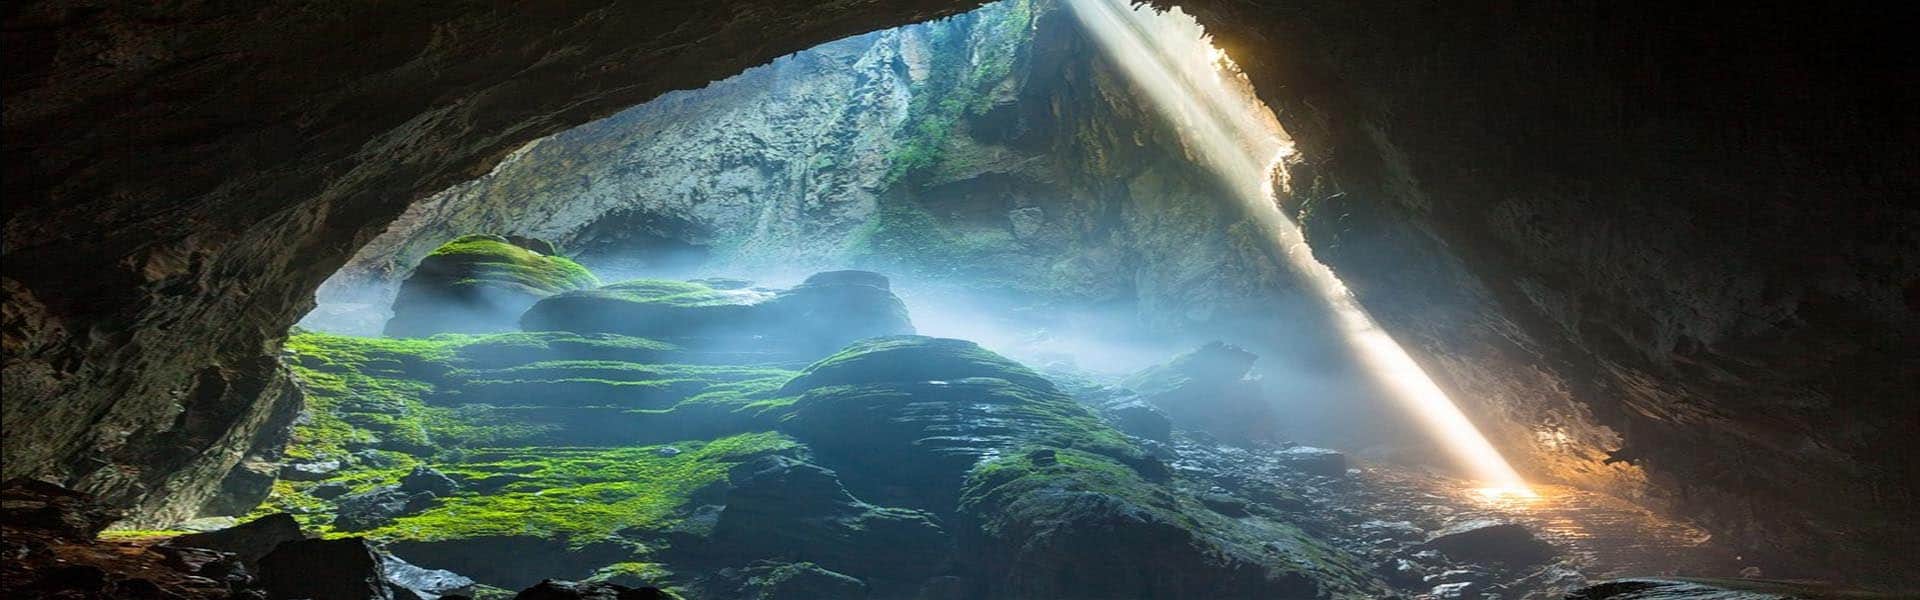 Explore Phong Nha cave